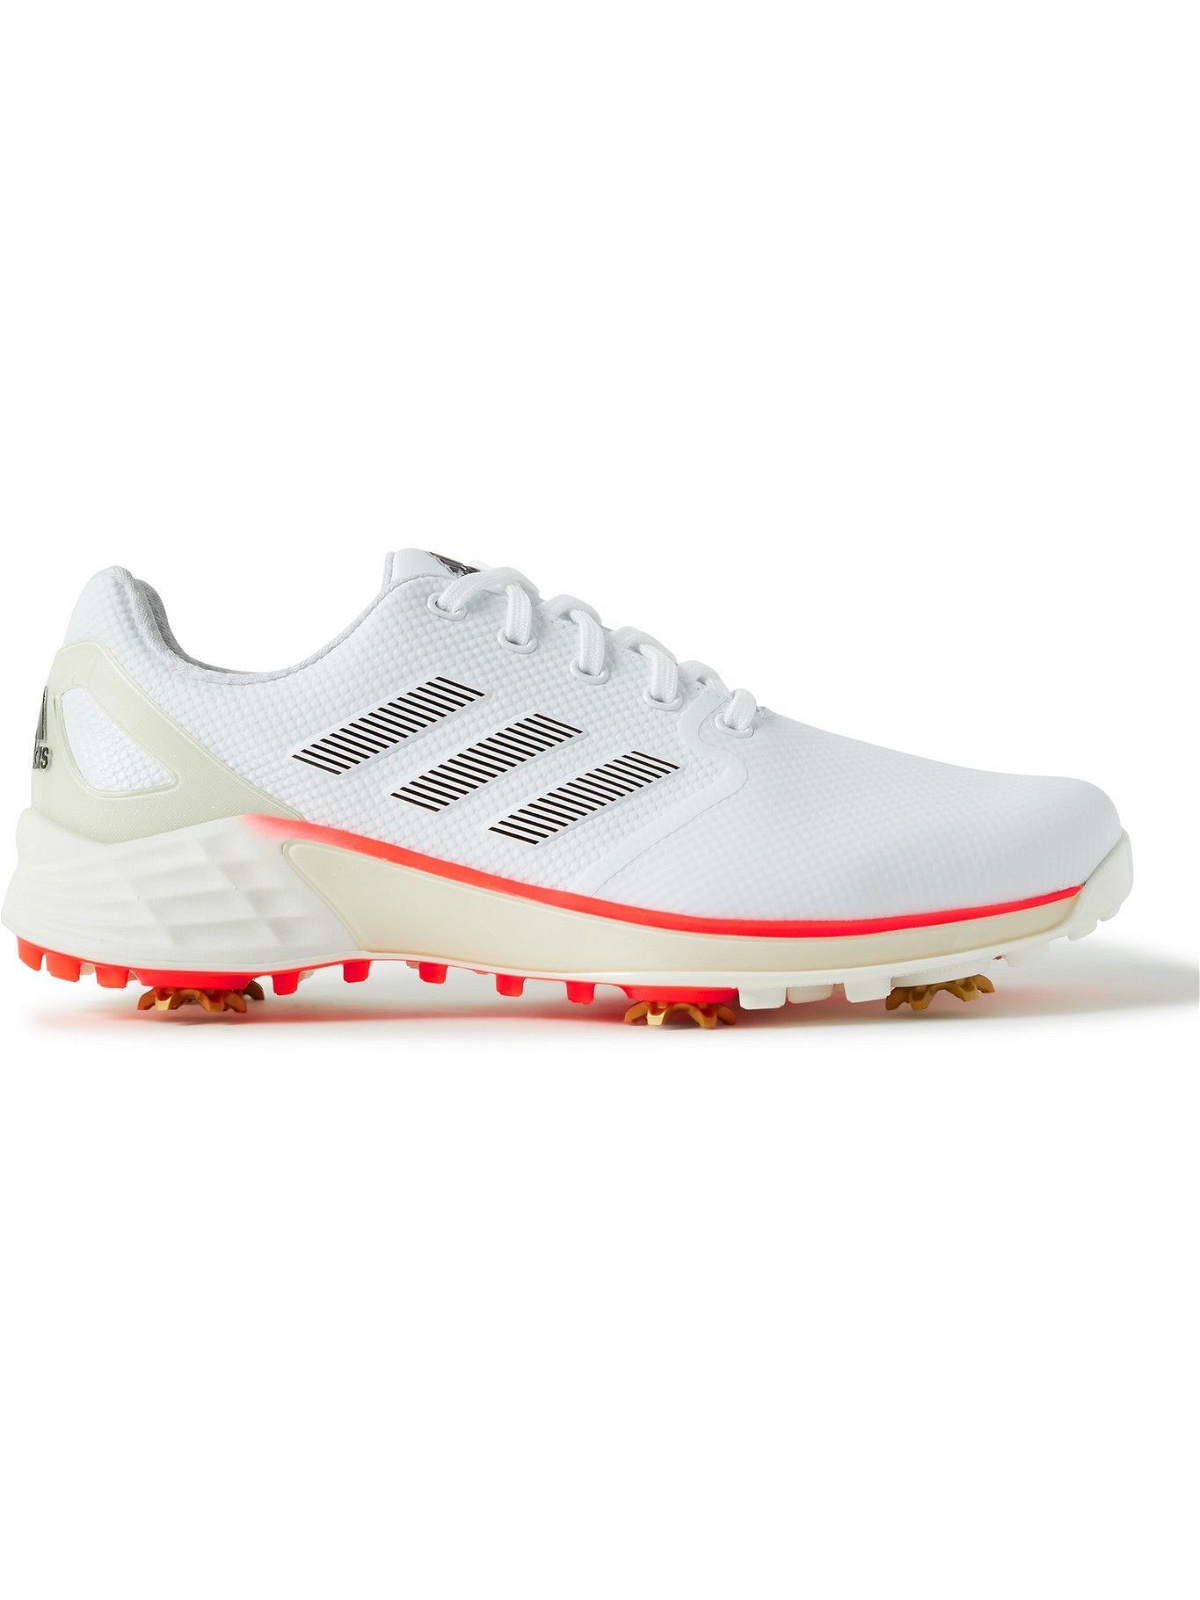 Photo: adidas Golf - ZG21 Rubber-Trimmed Sprintskin Golf Sneakers - White